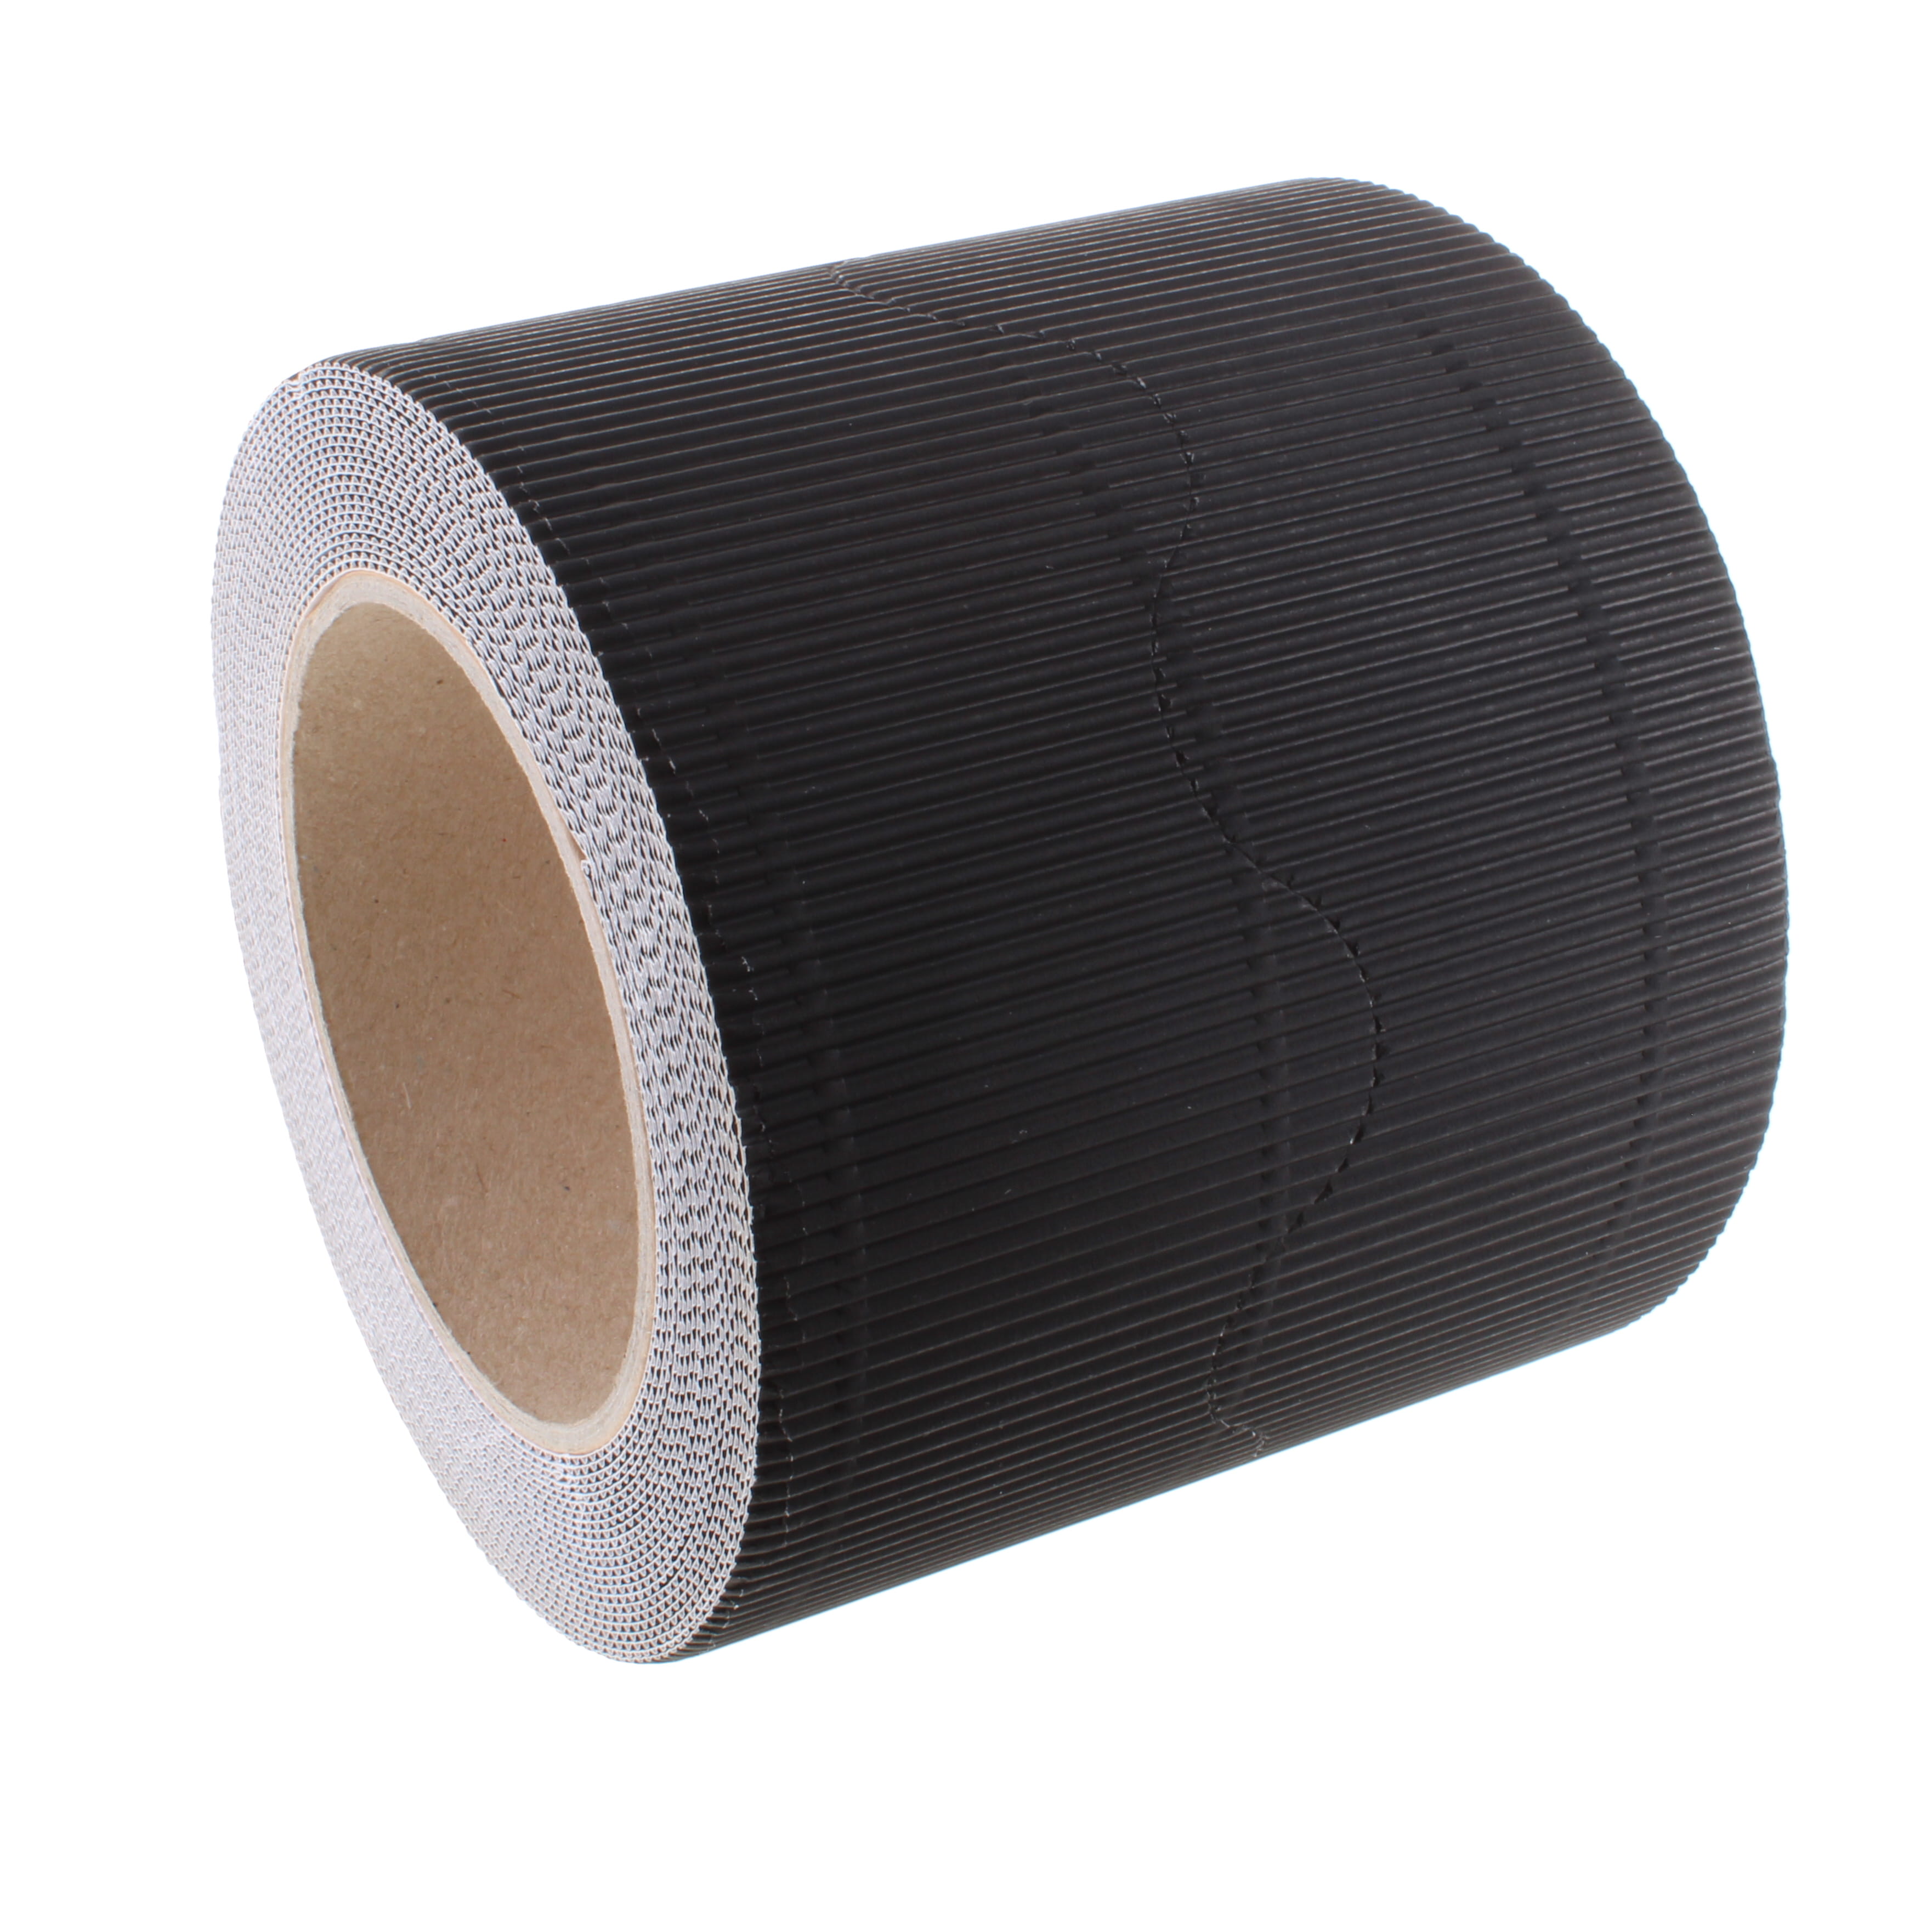 Border Rolls Corrugated Scalloped Black 57mm x 7.5m - pack of 2